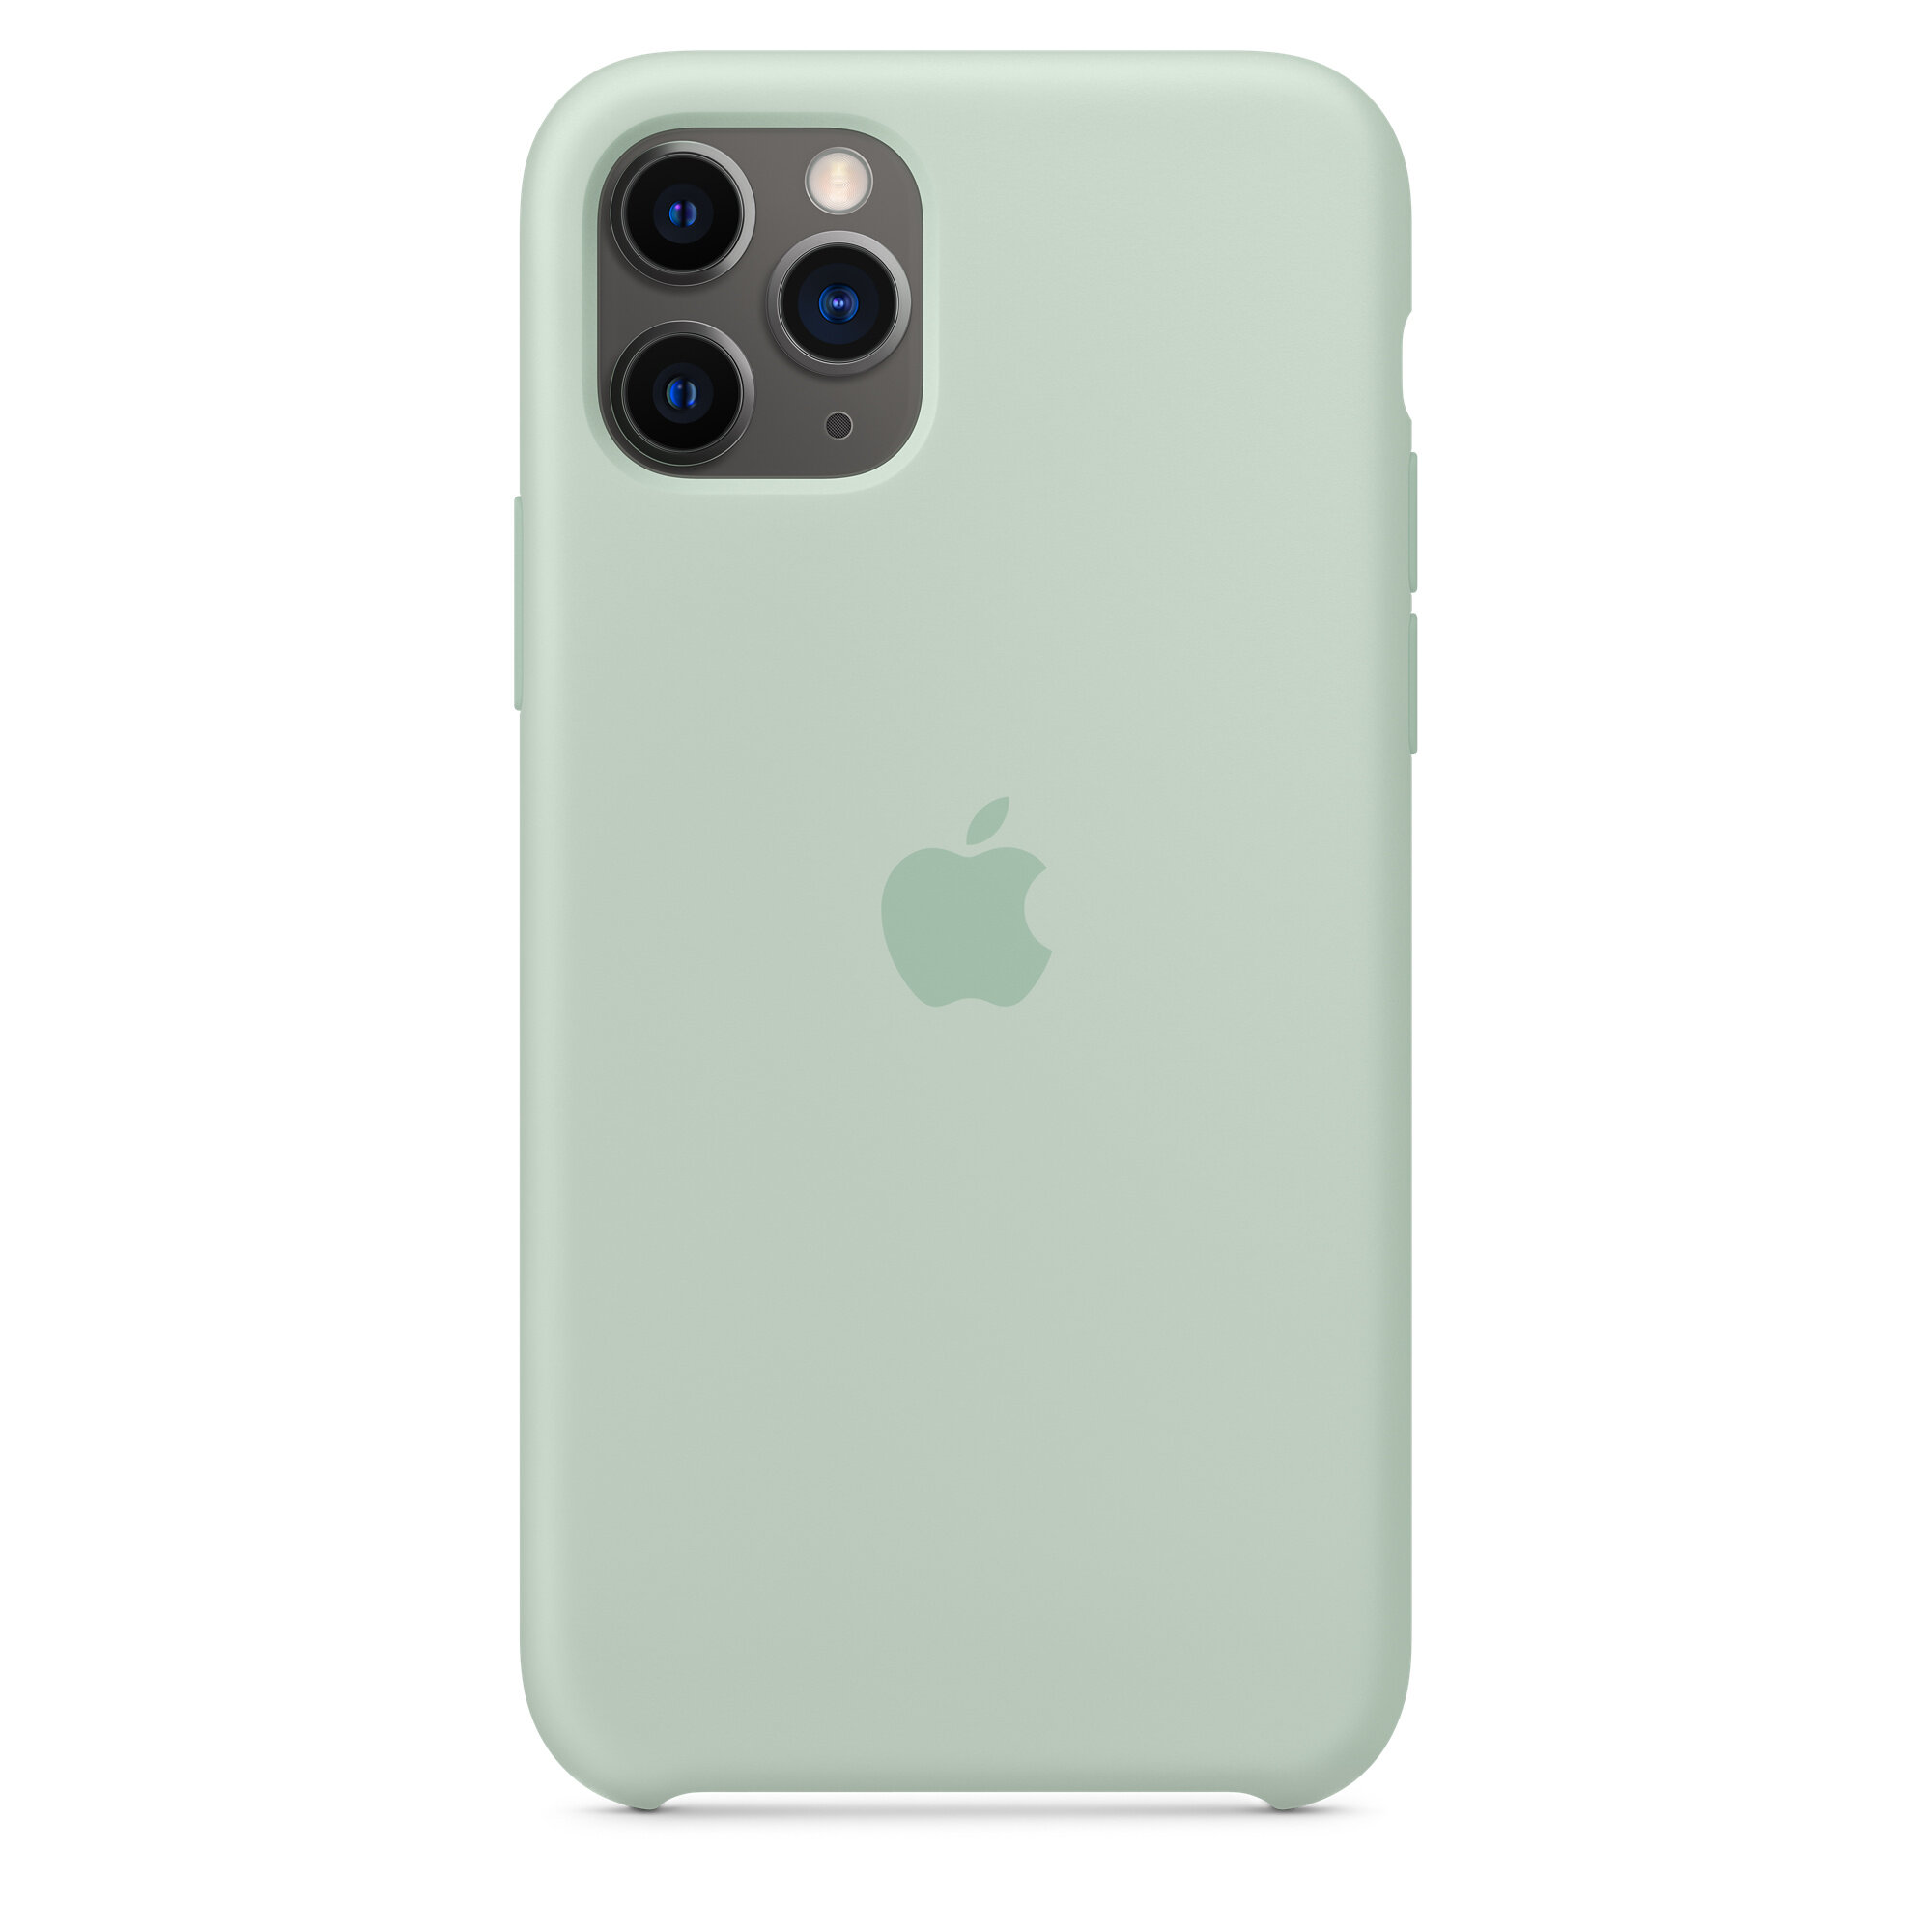 Apple iPhone 11 Pro Silicone Case in Beryl.jpg